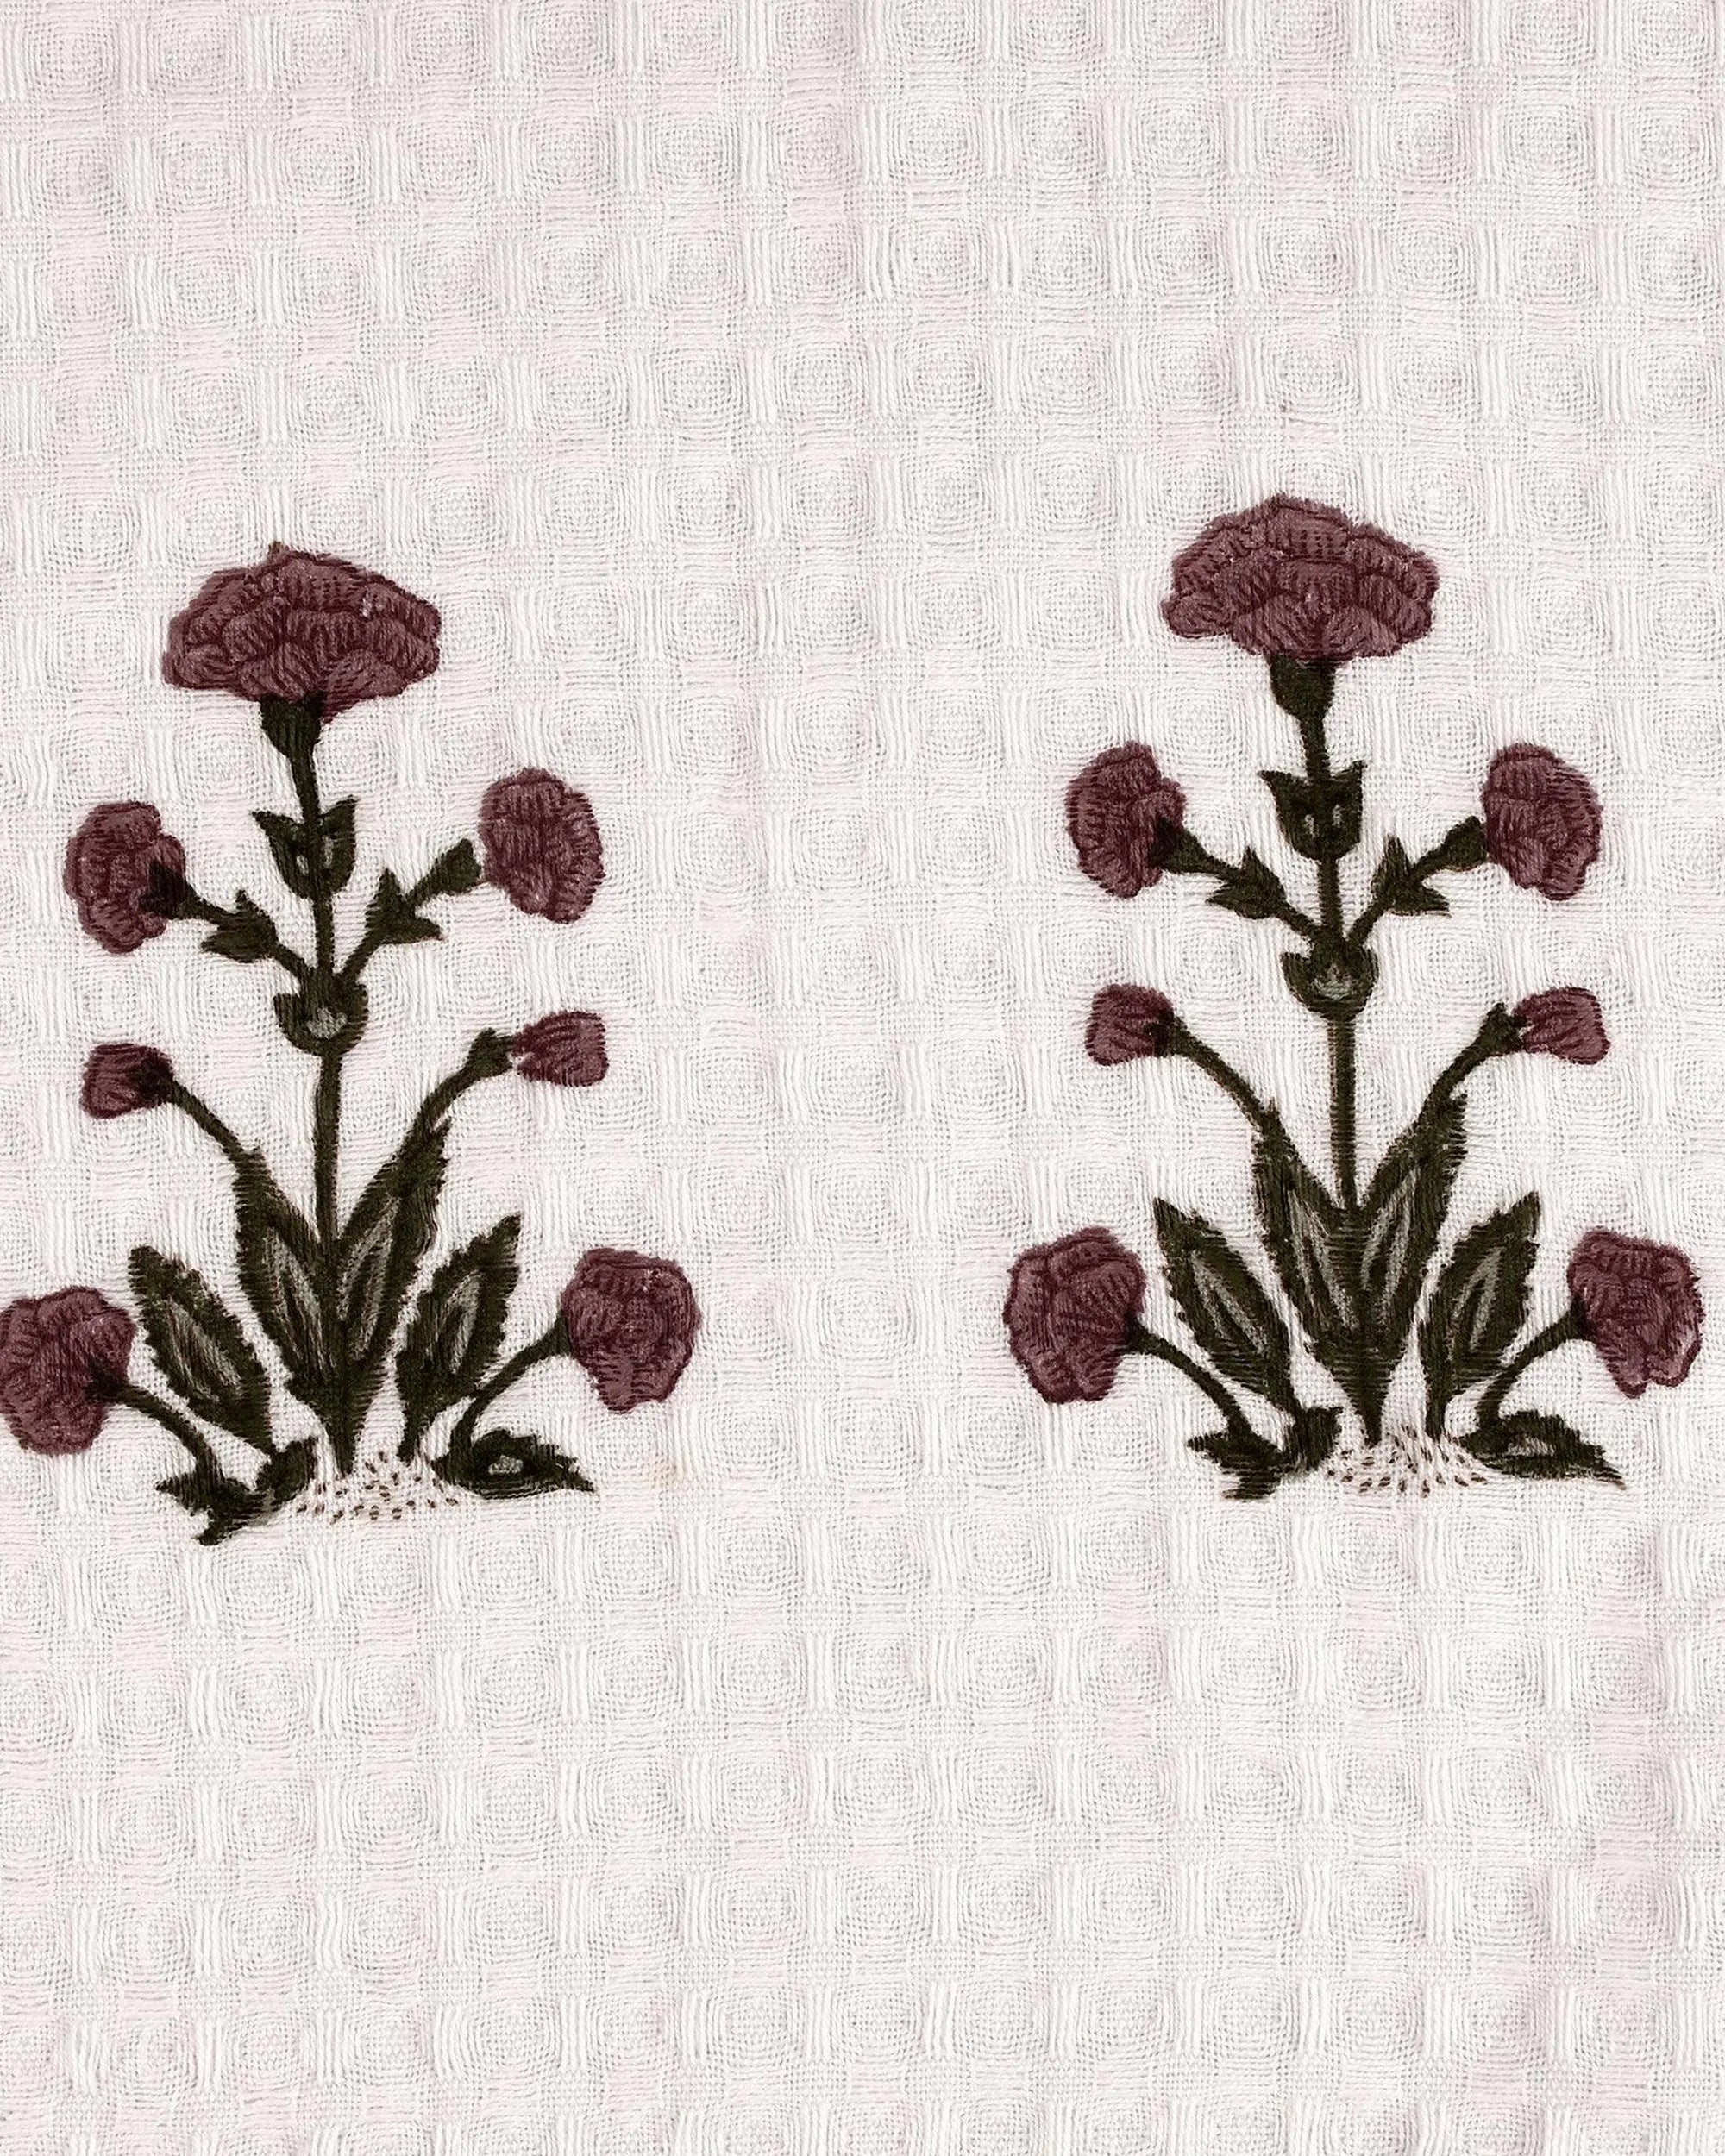 Rose Hand Towel (Set of 2)